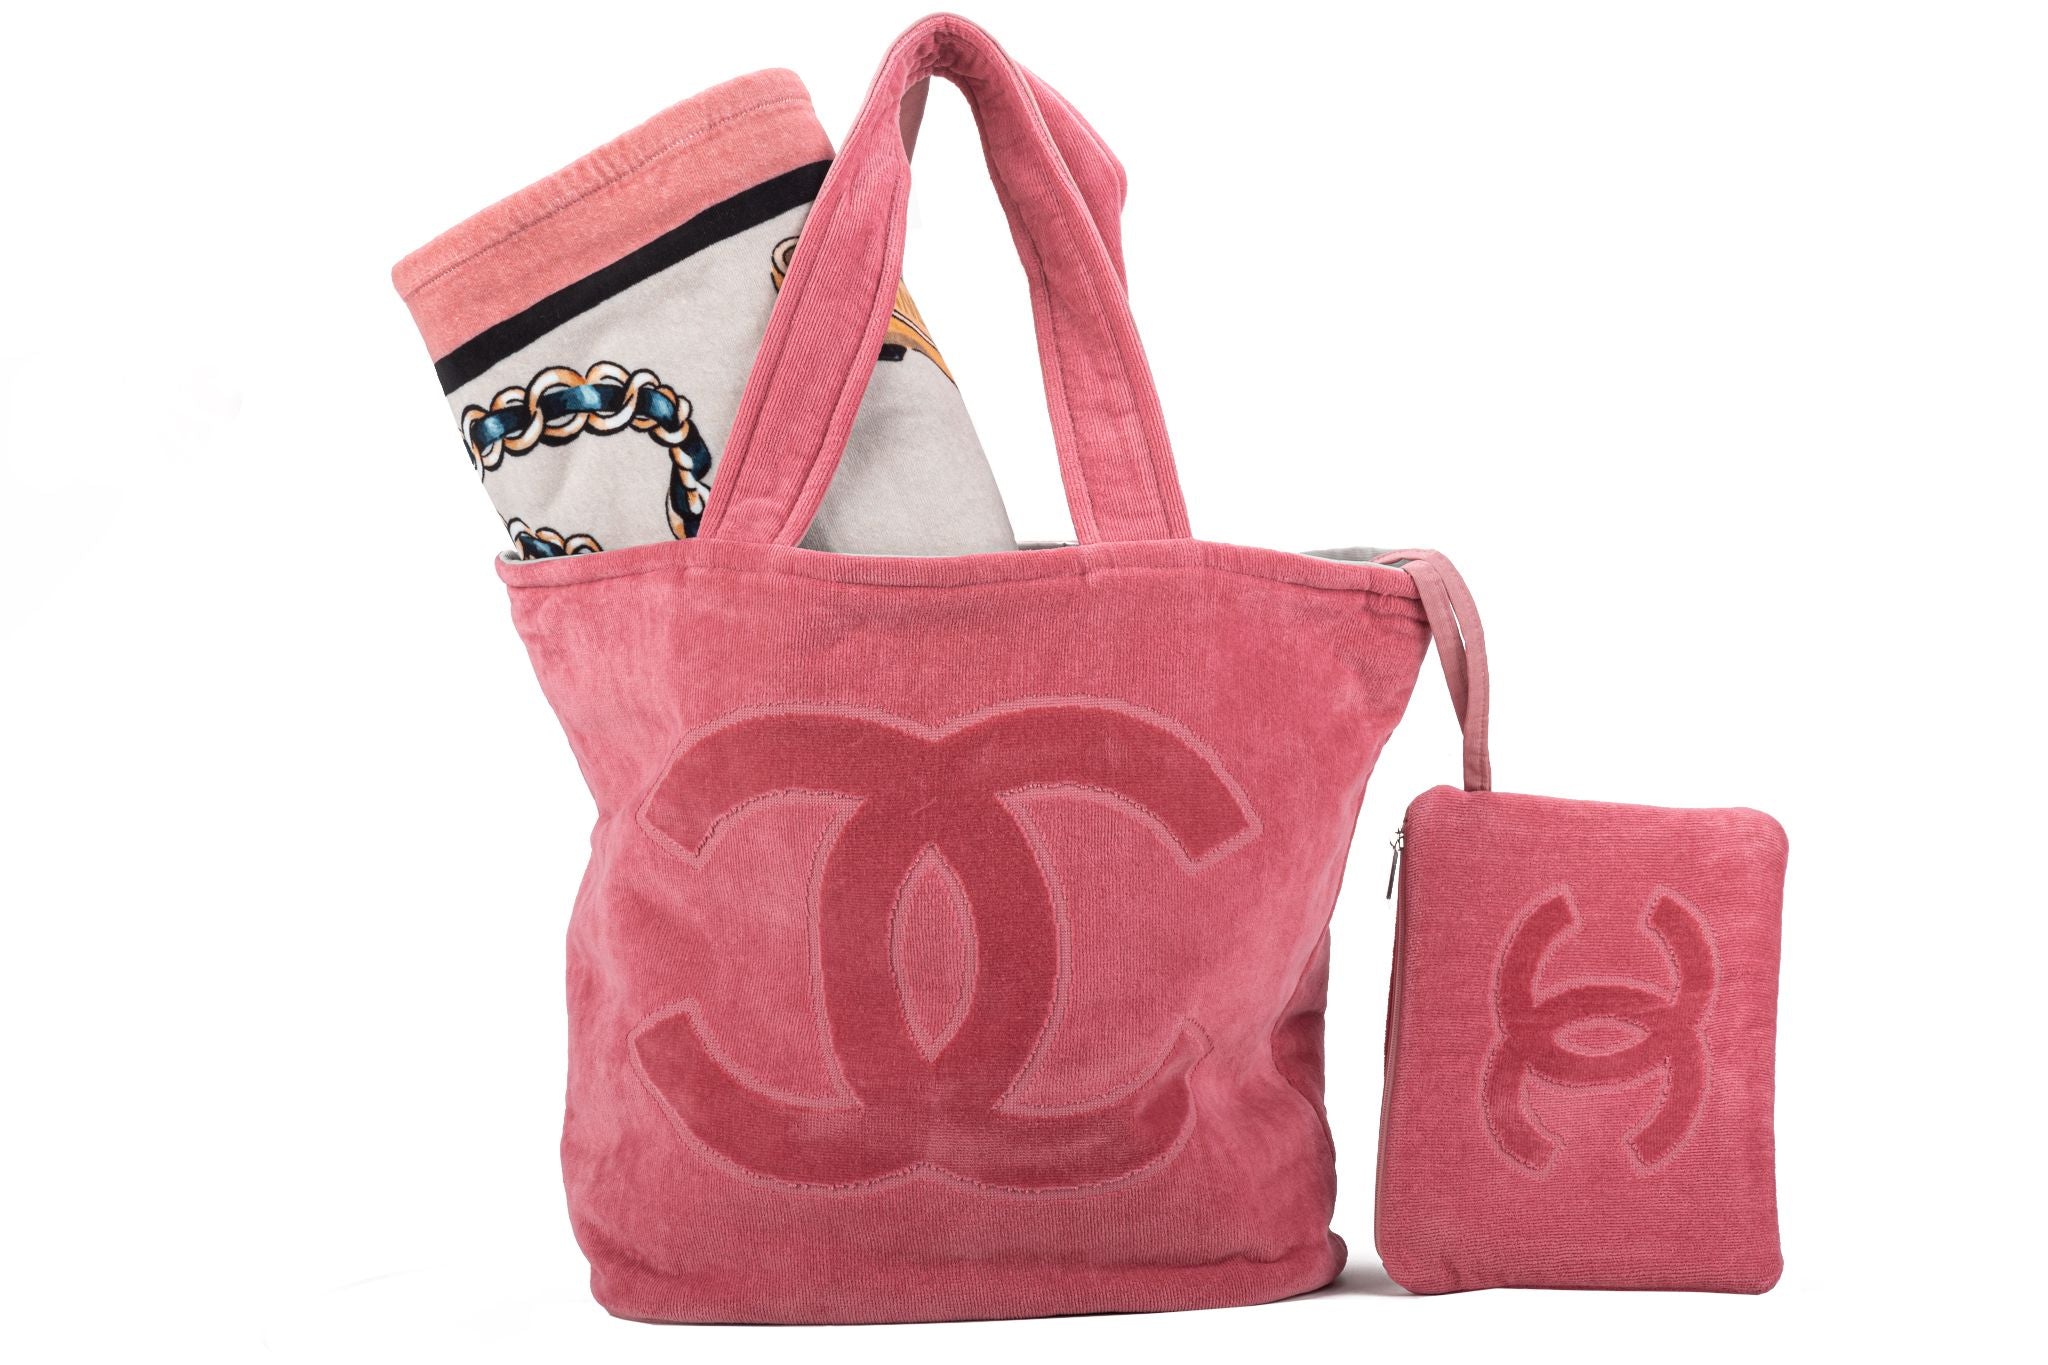 Chanel Terry Cotton Beach Bag & Towel Set - Like New - The